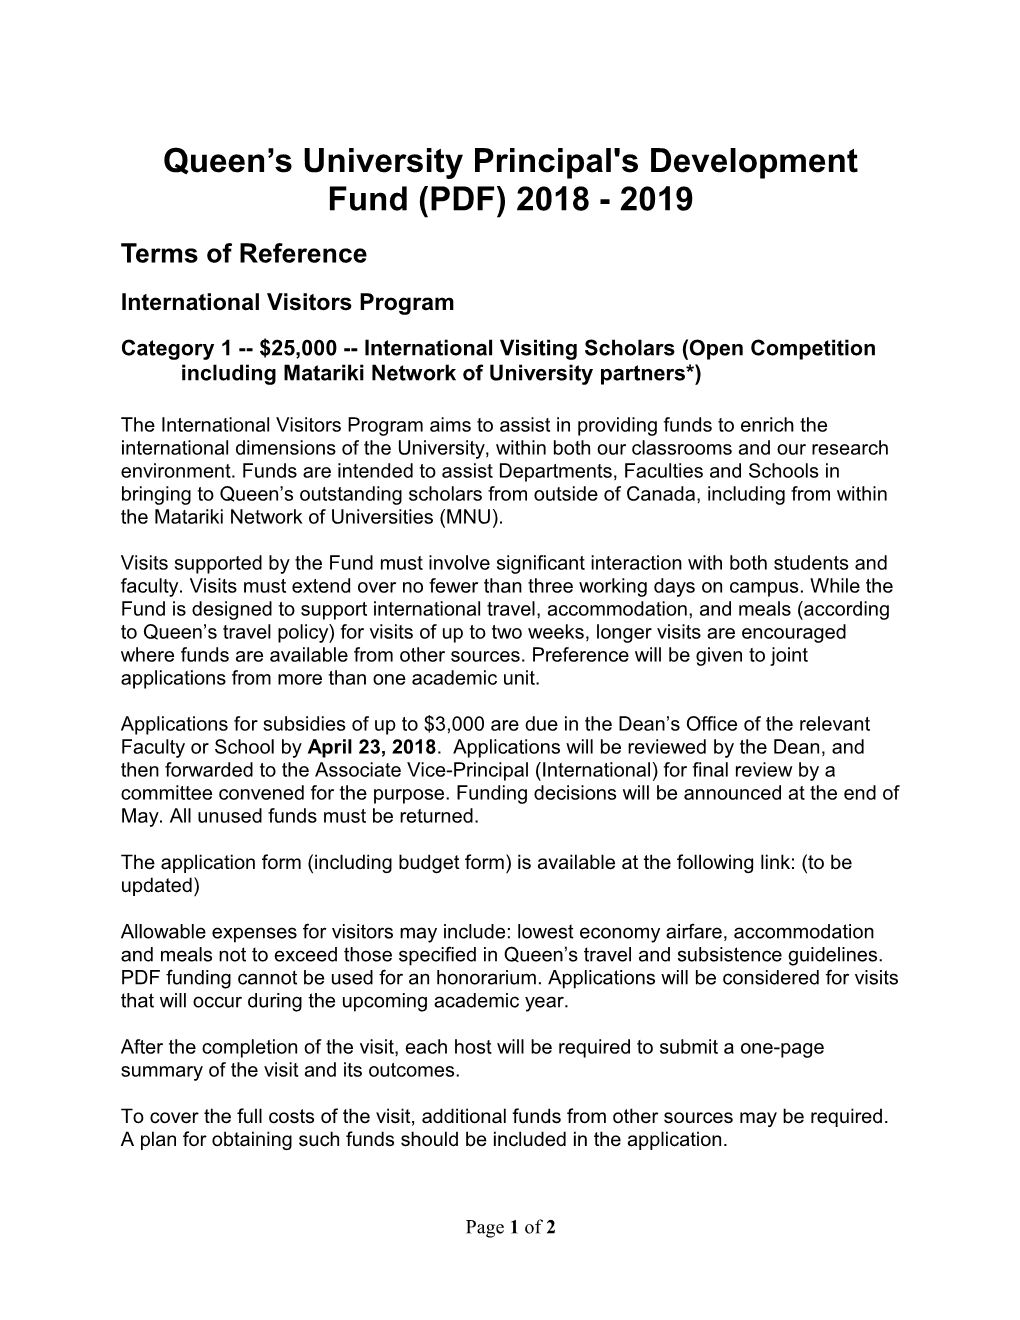 Principal's Development Fund 2006/07